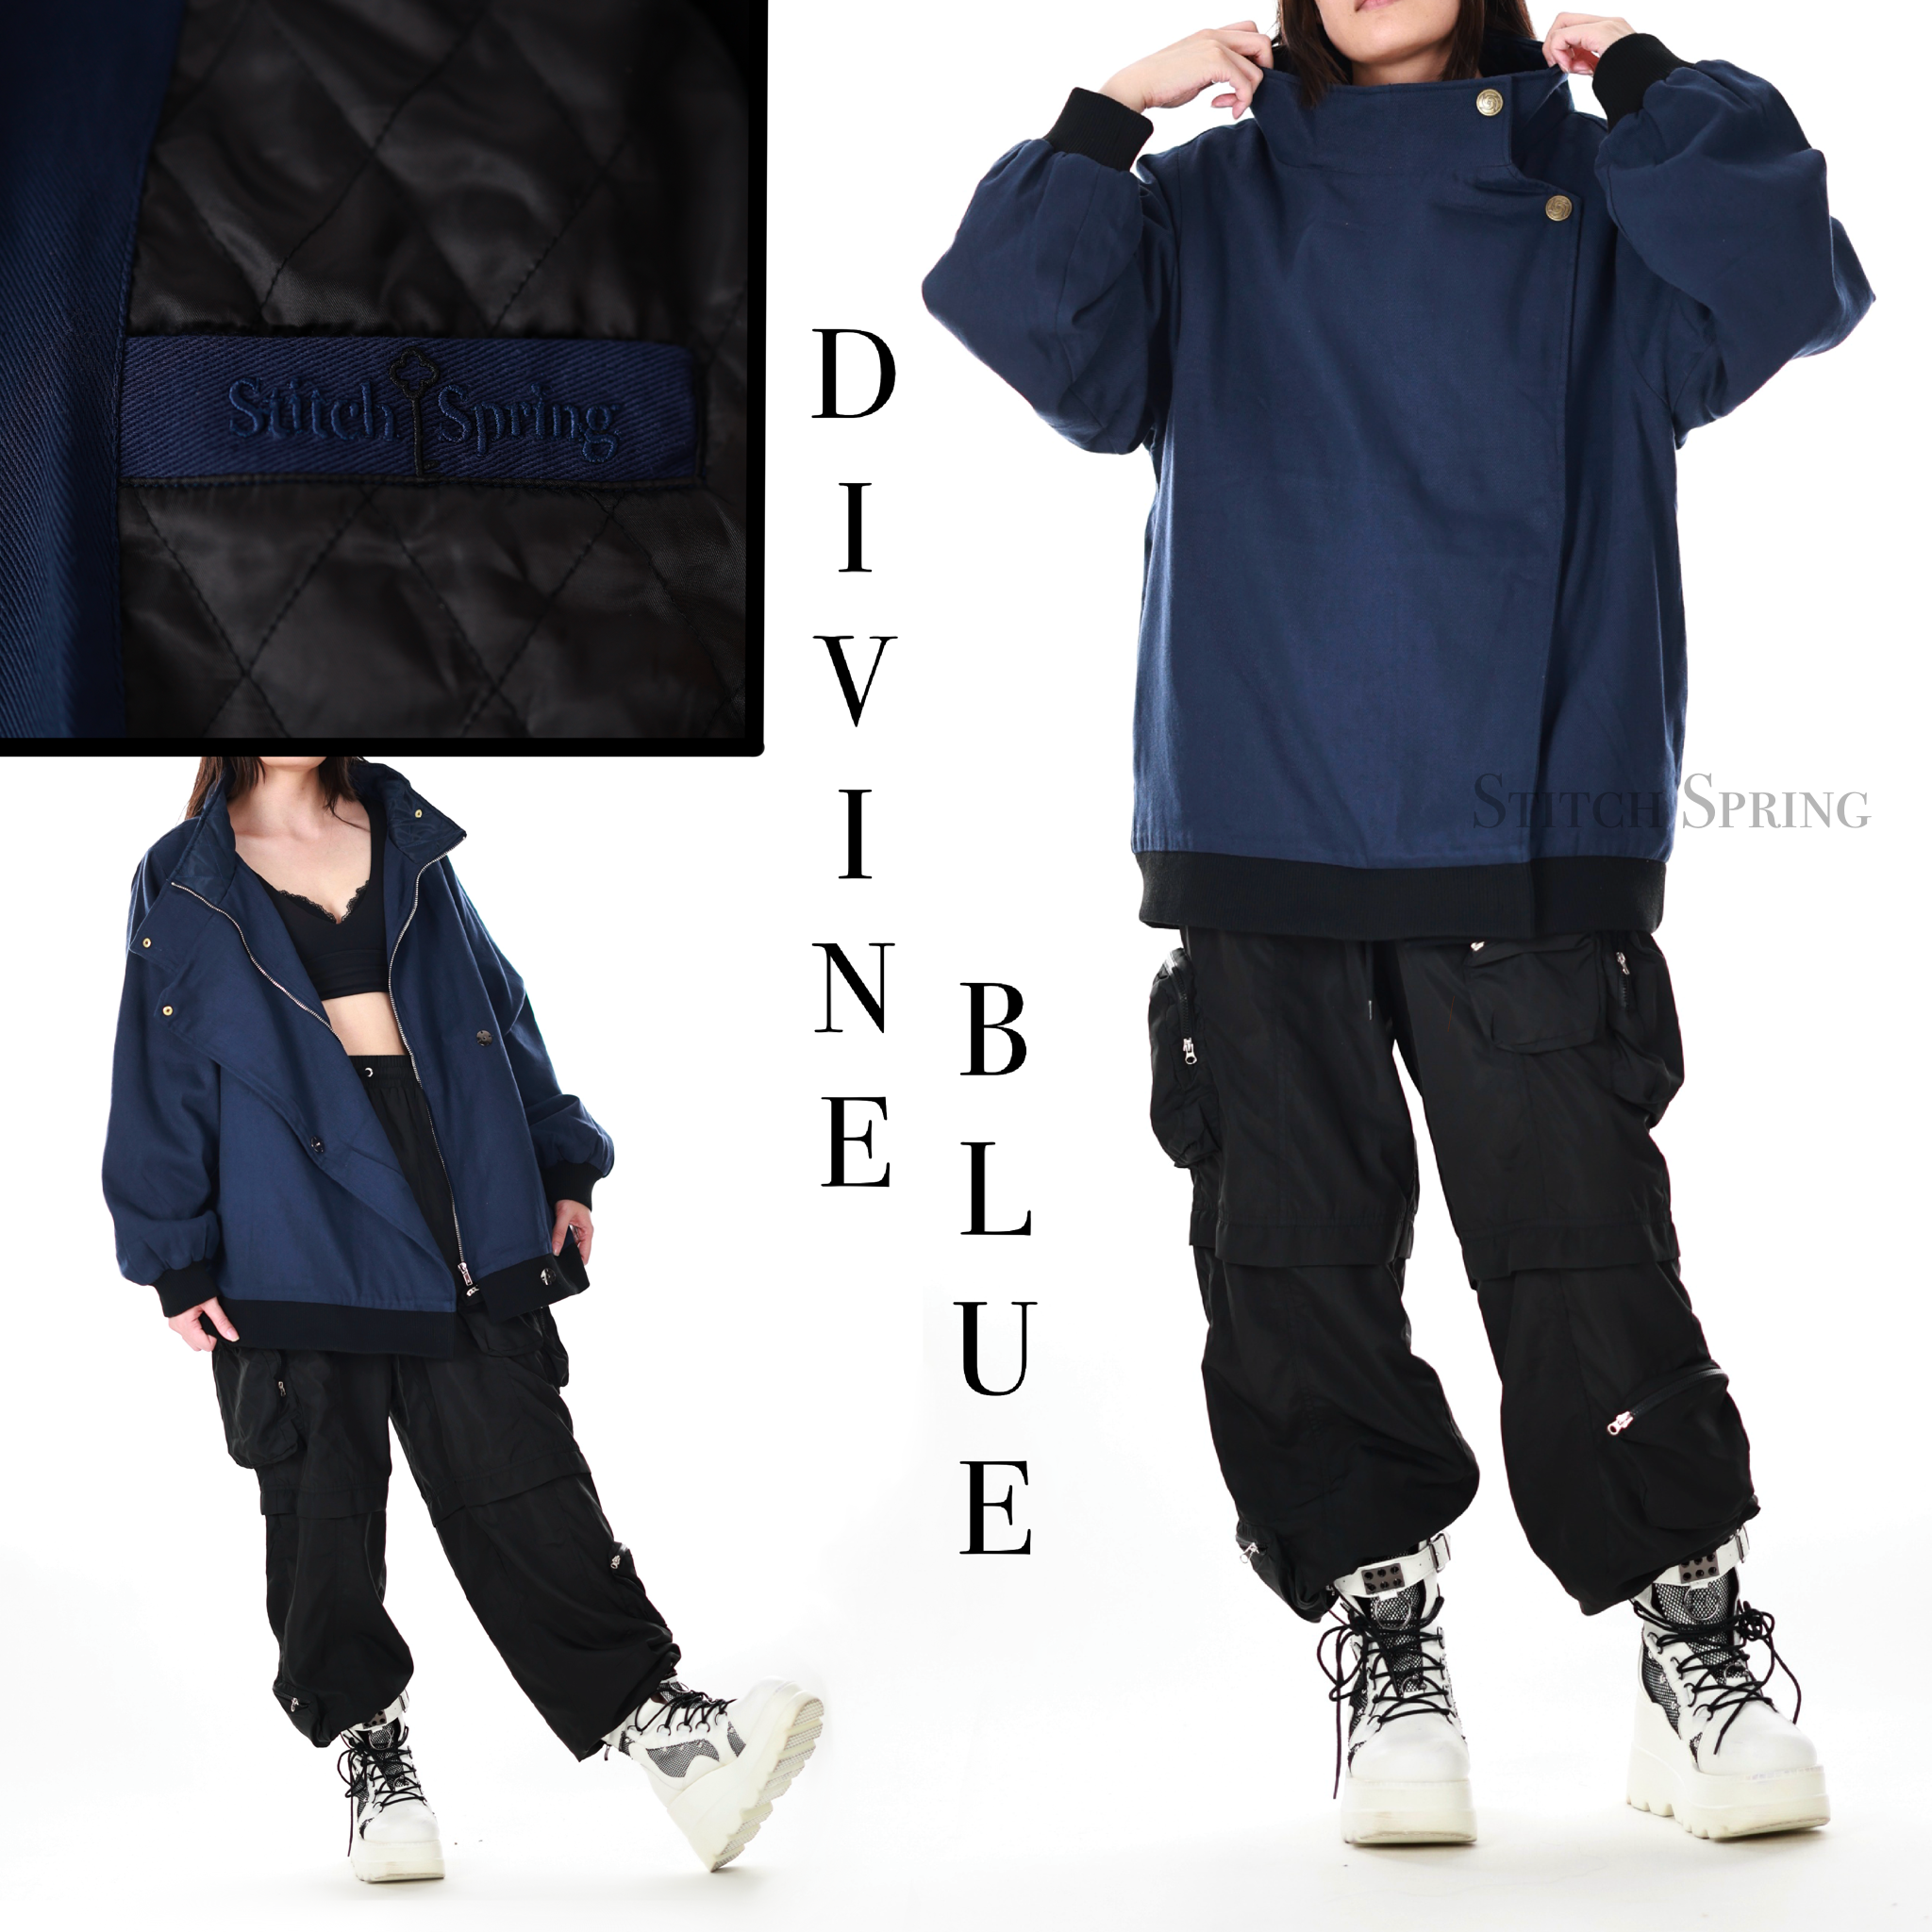 Divine Blue Denim Jacket Preorder